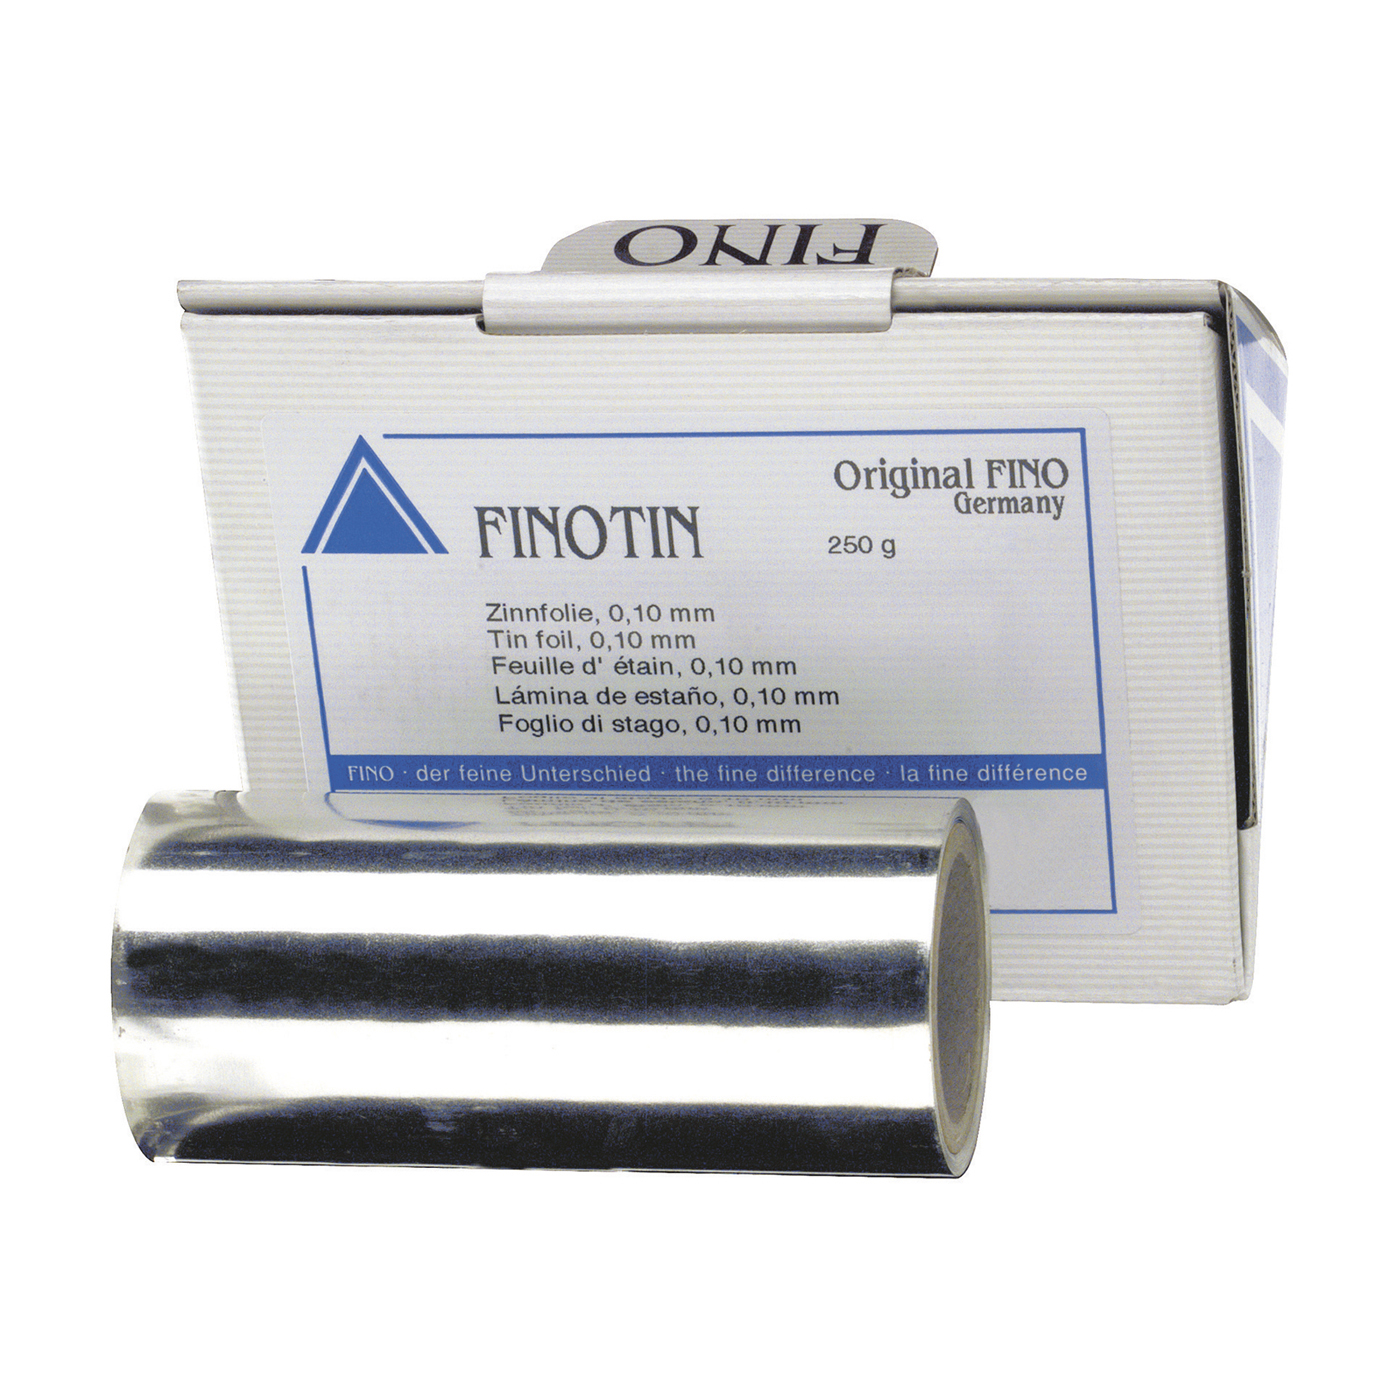 FINOTIN Zinnfolie, 0,10 mm - 250 g